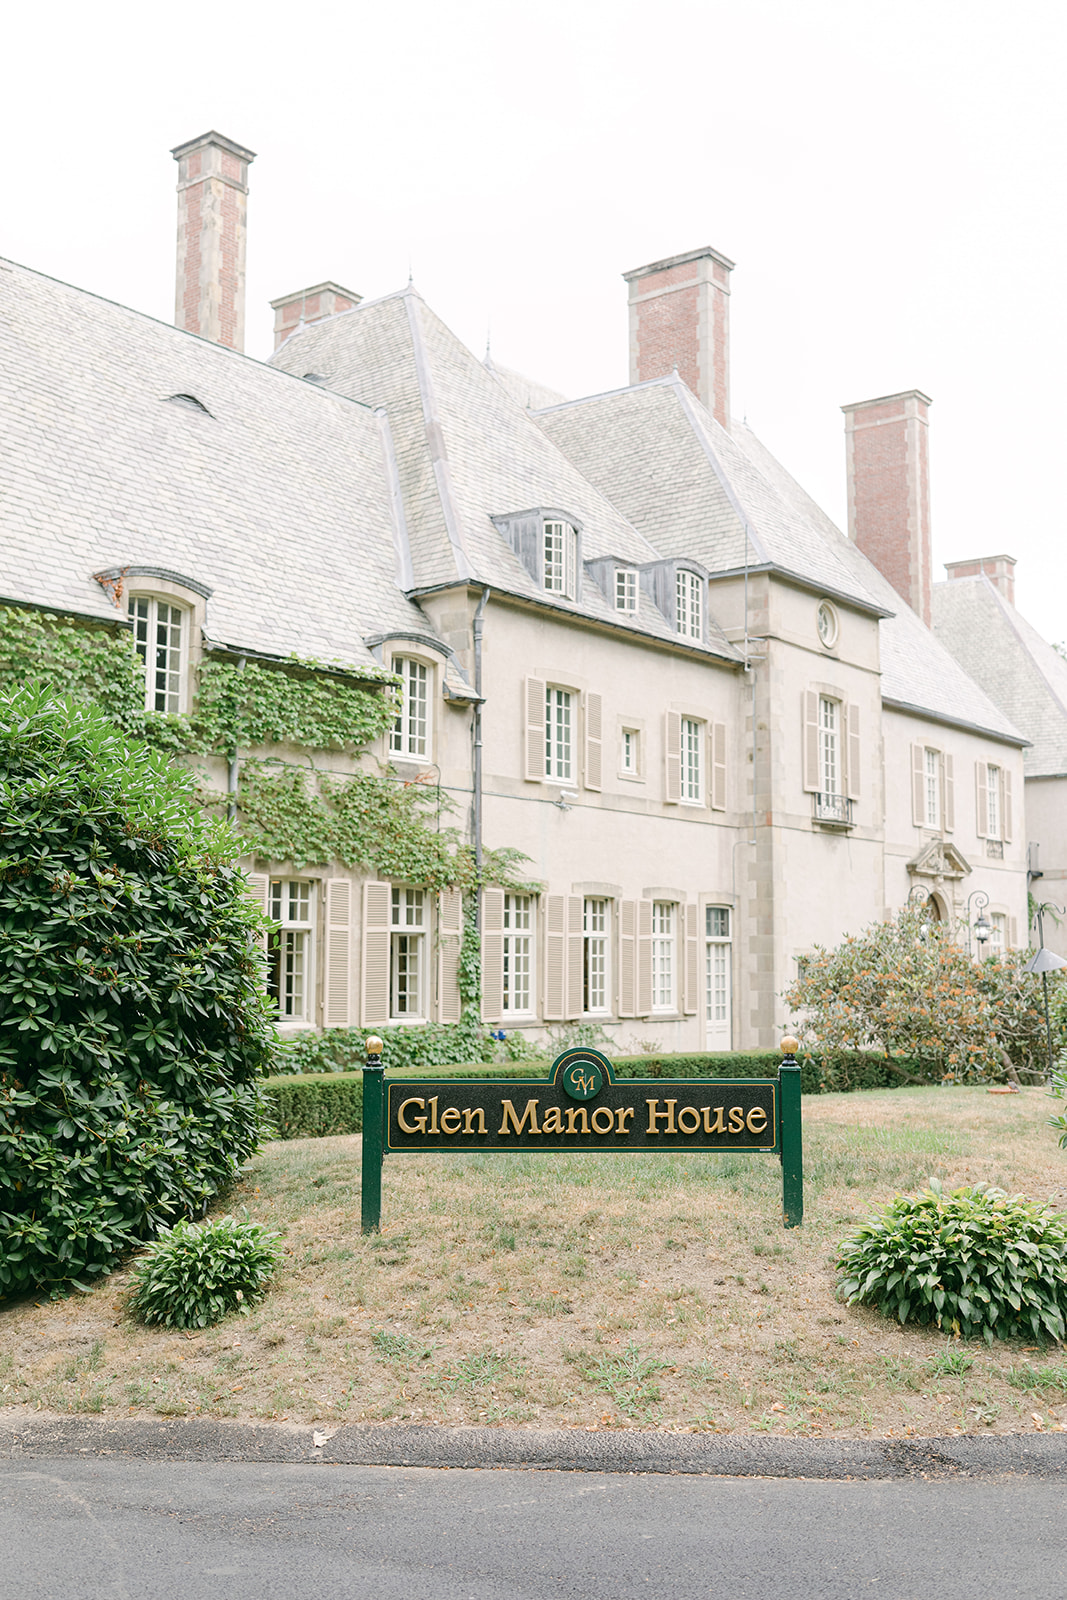 glen manor house sign detail